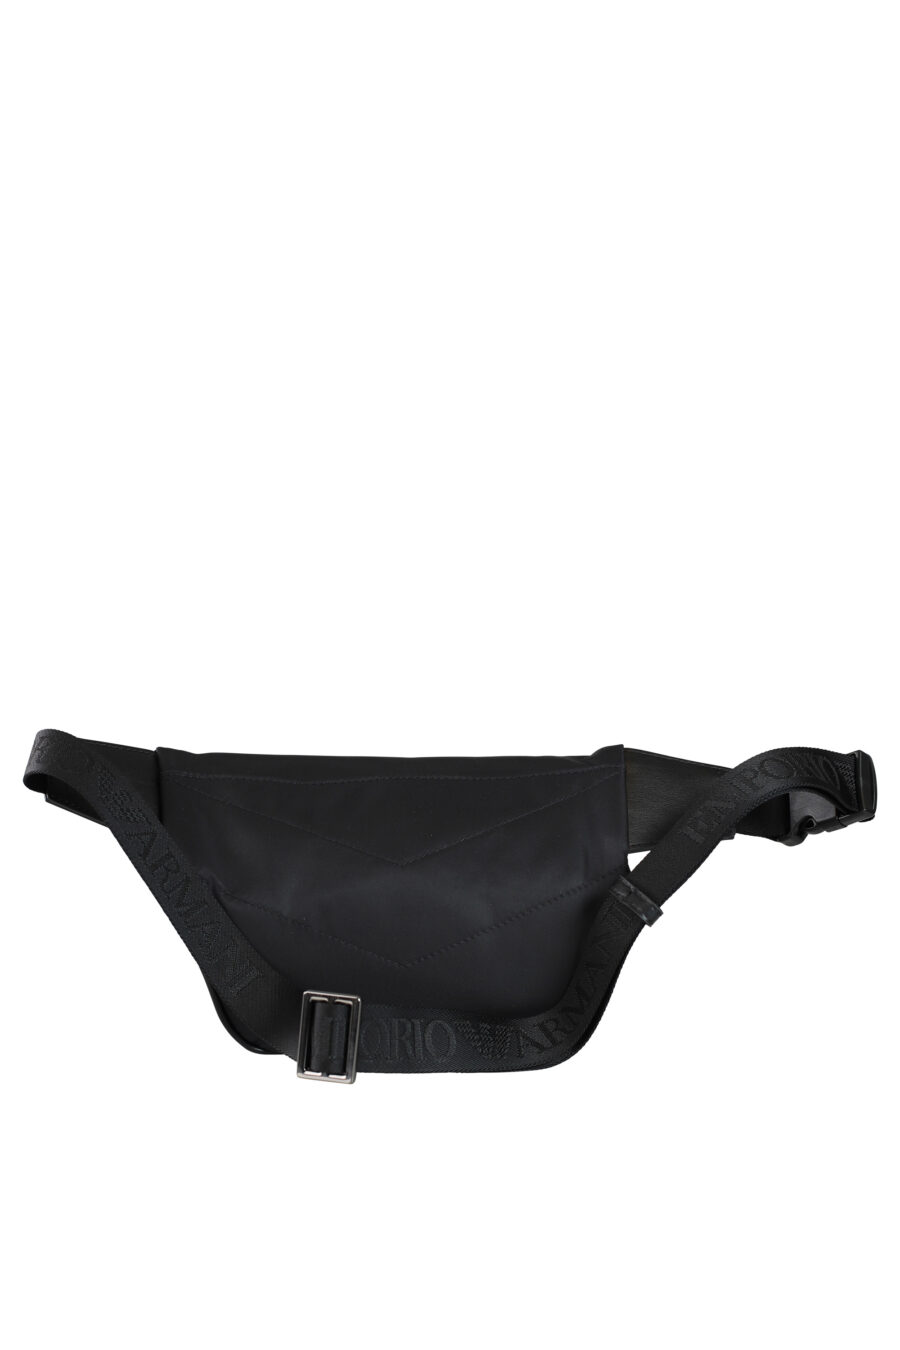 Black bum bag with metal mini-logo - 8053616709654 3